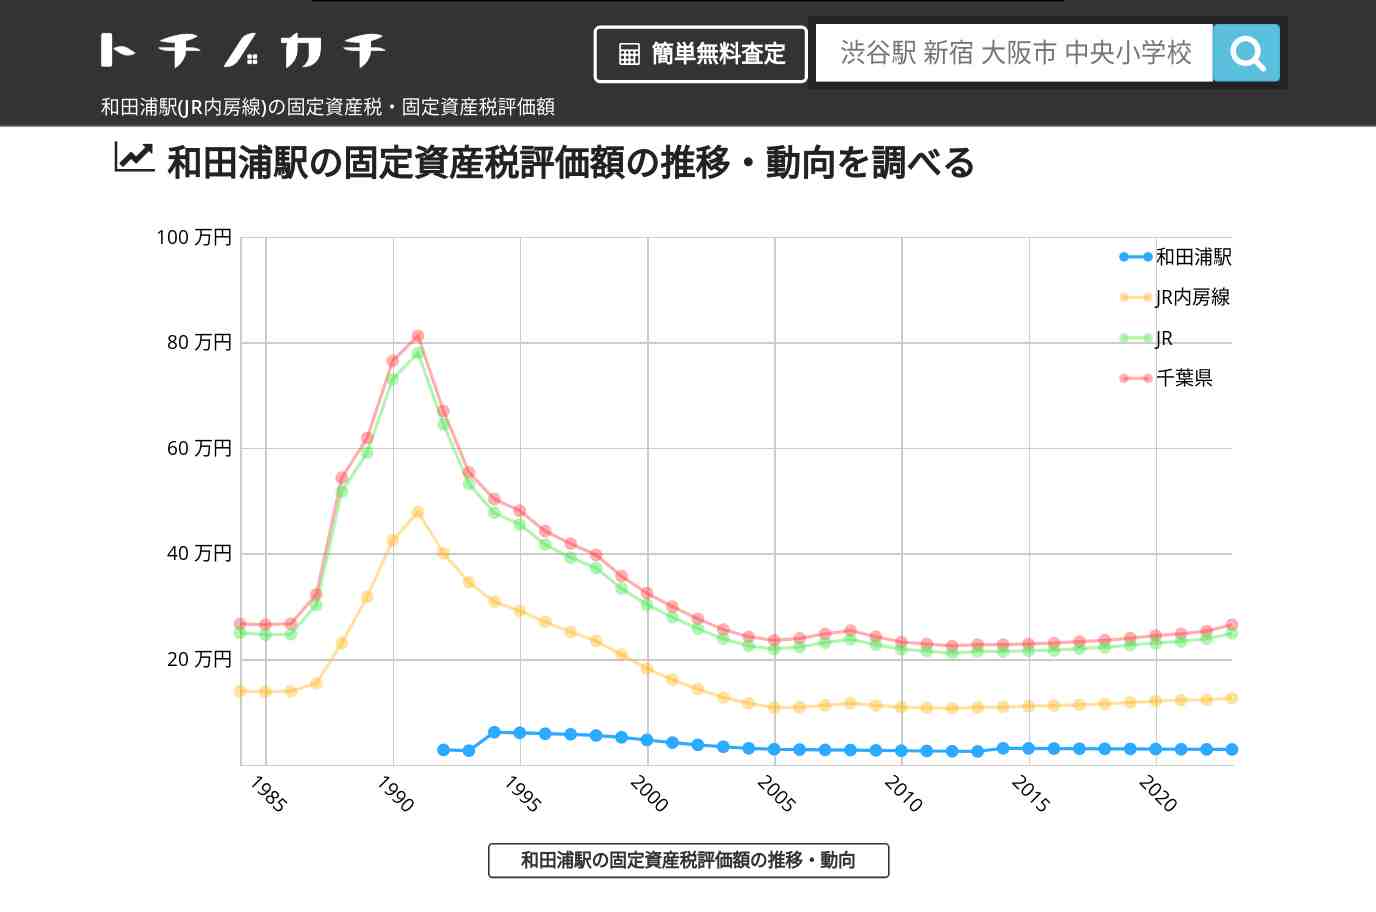 和田浦駅(JR内房線)の固定資産税・固定資産税評価額 | トチノカチ